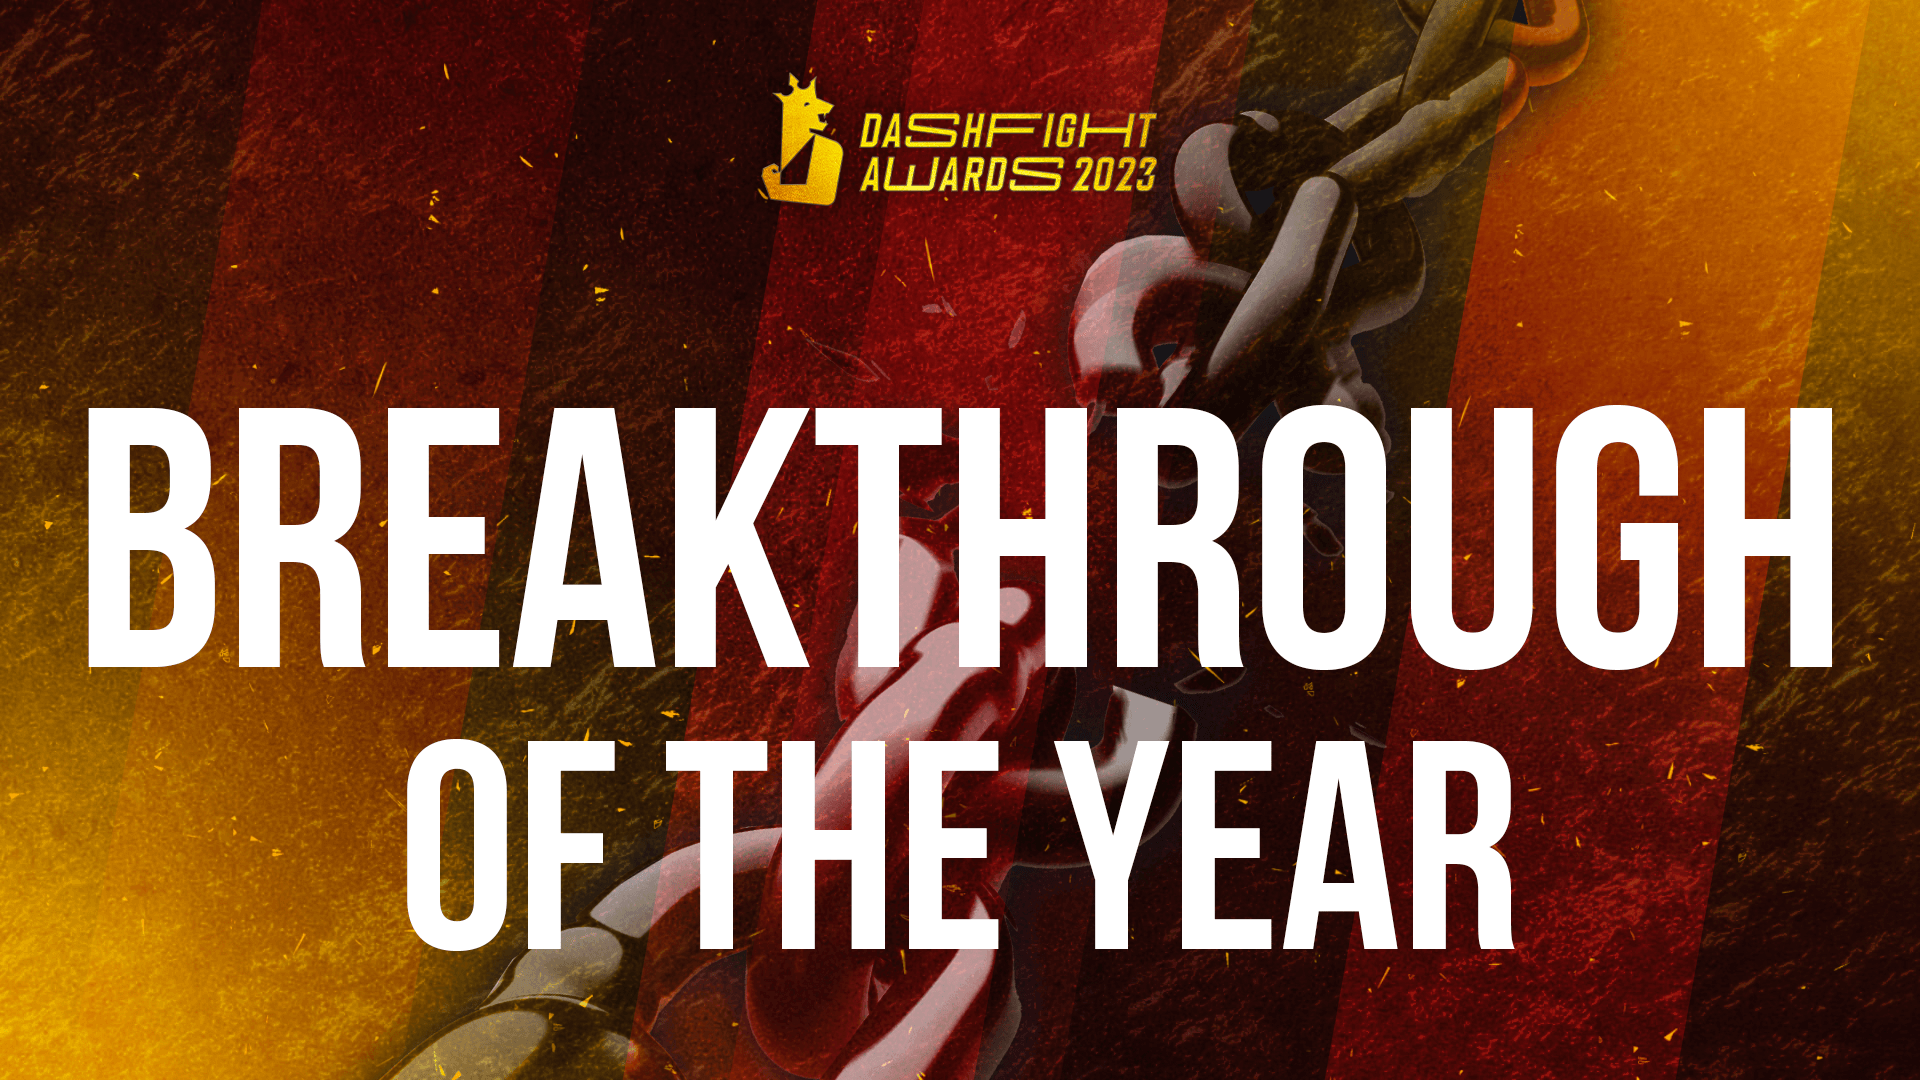 DashFight Awards 2023: Breakthrough Player of the Year